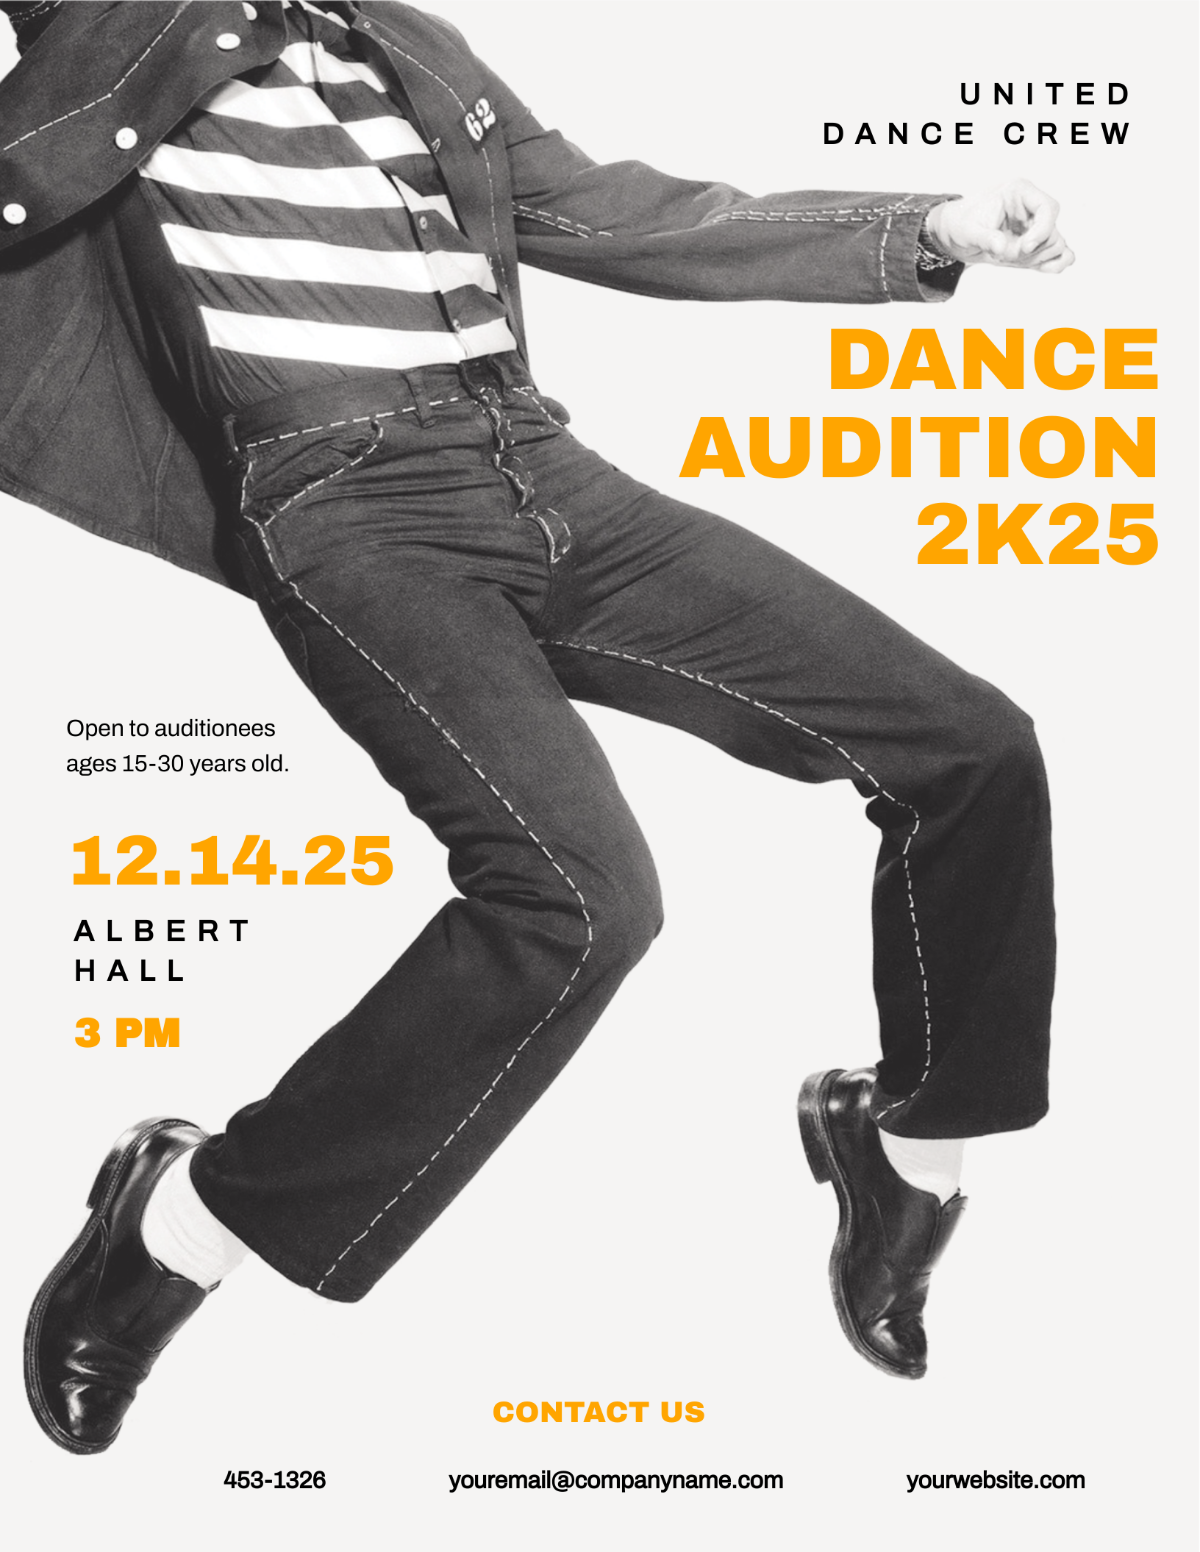 Dance Team Audition Flyer Template